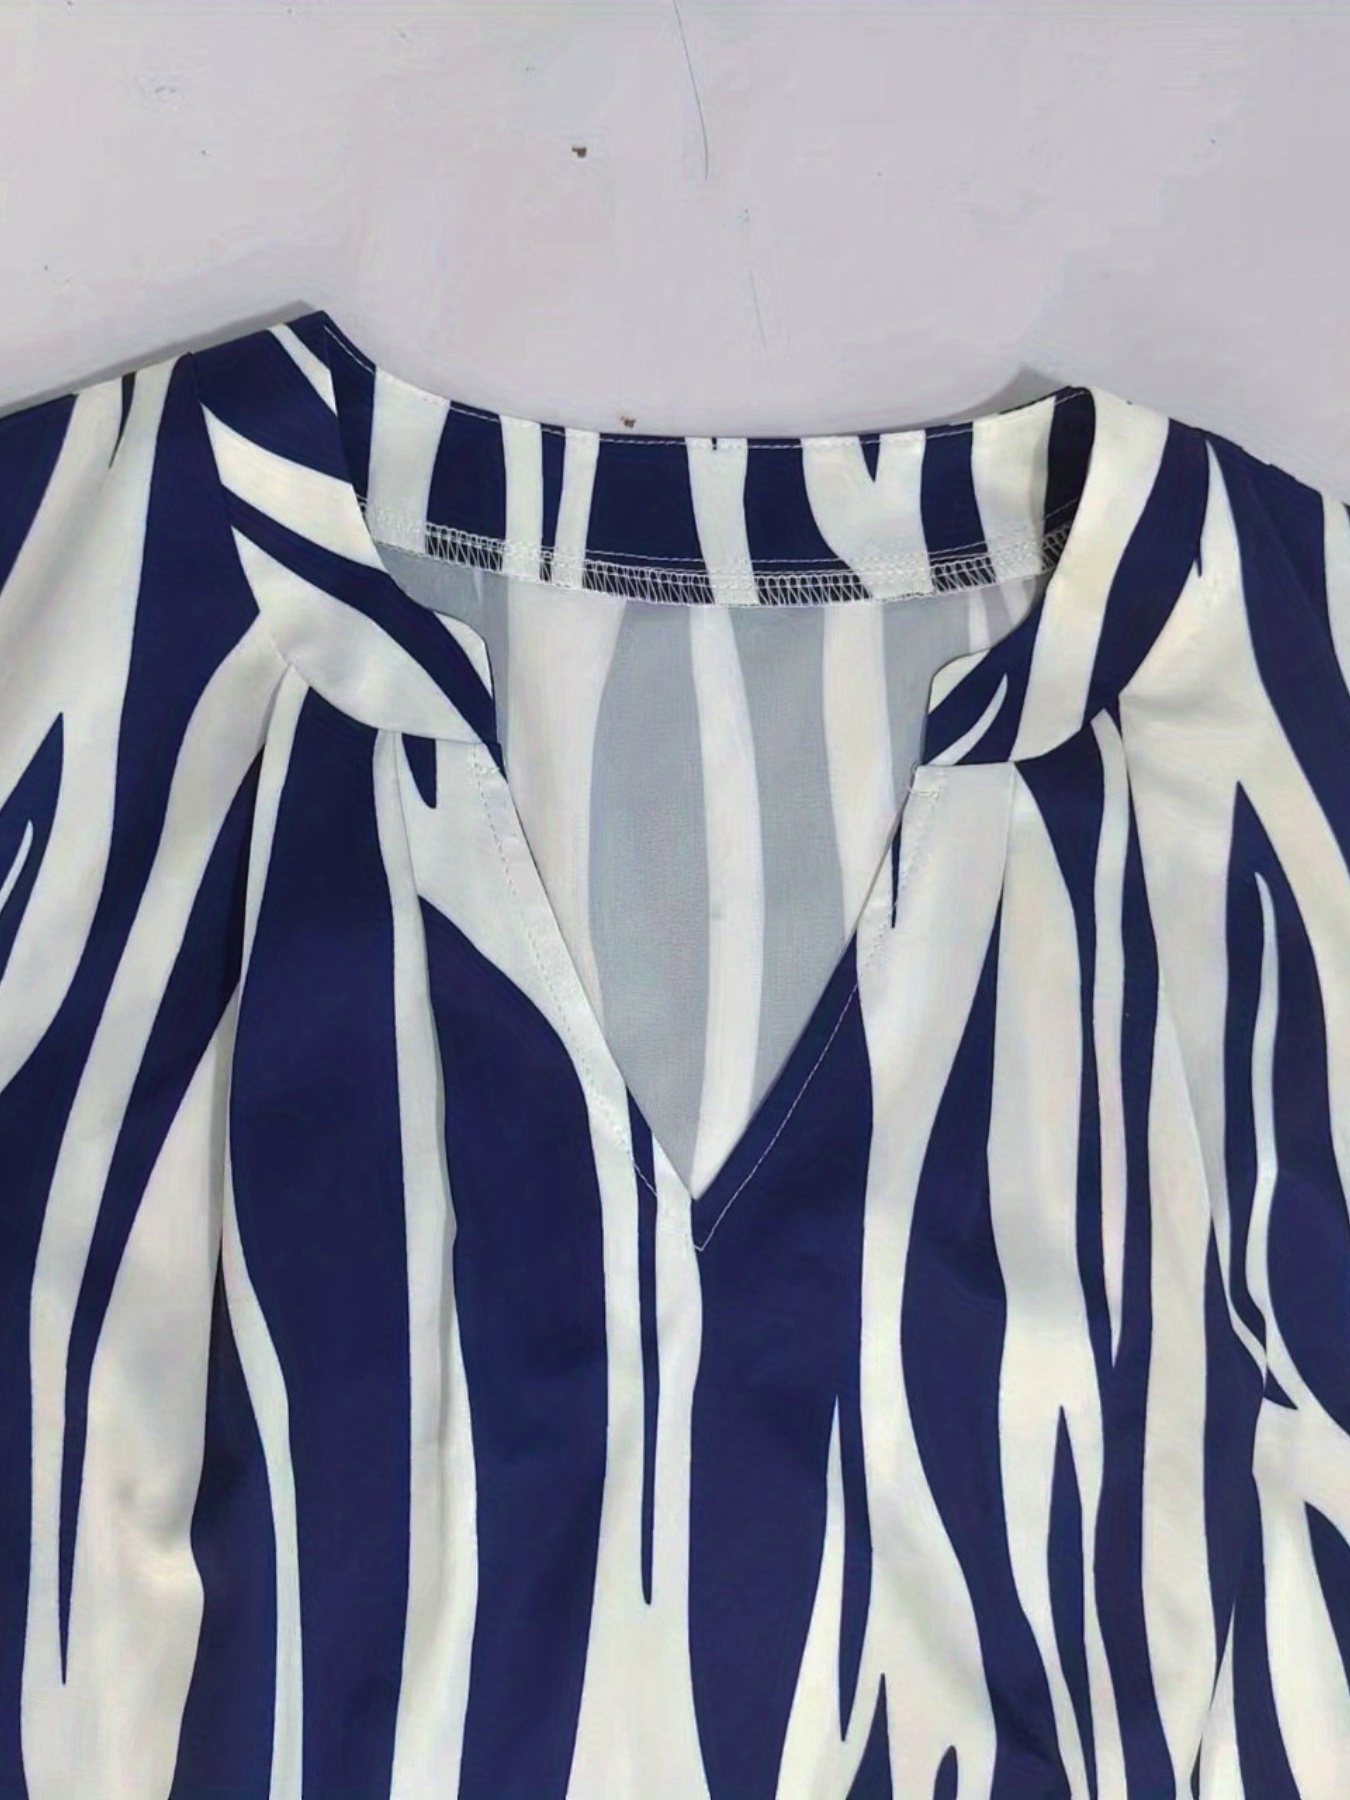 abstract ripple print dress casual v neck sleeveless dress womens clothing details 58